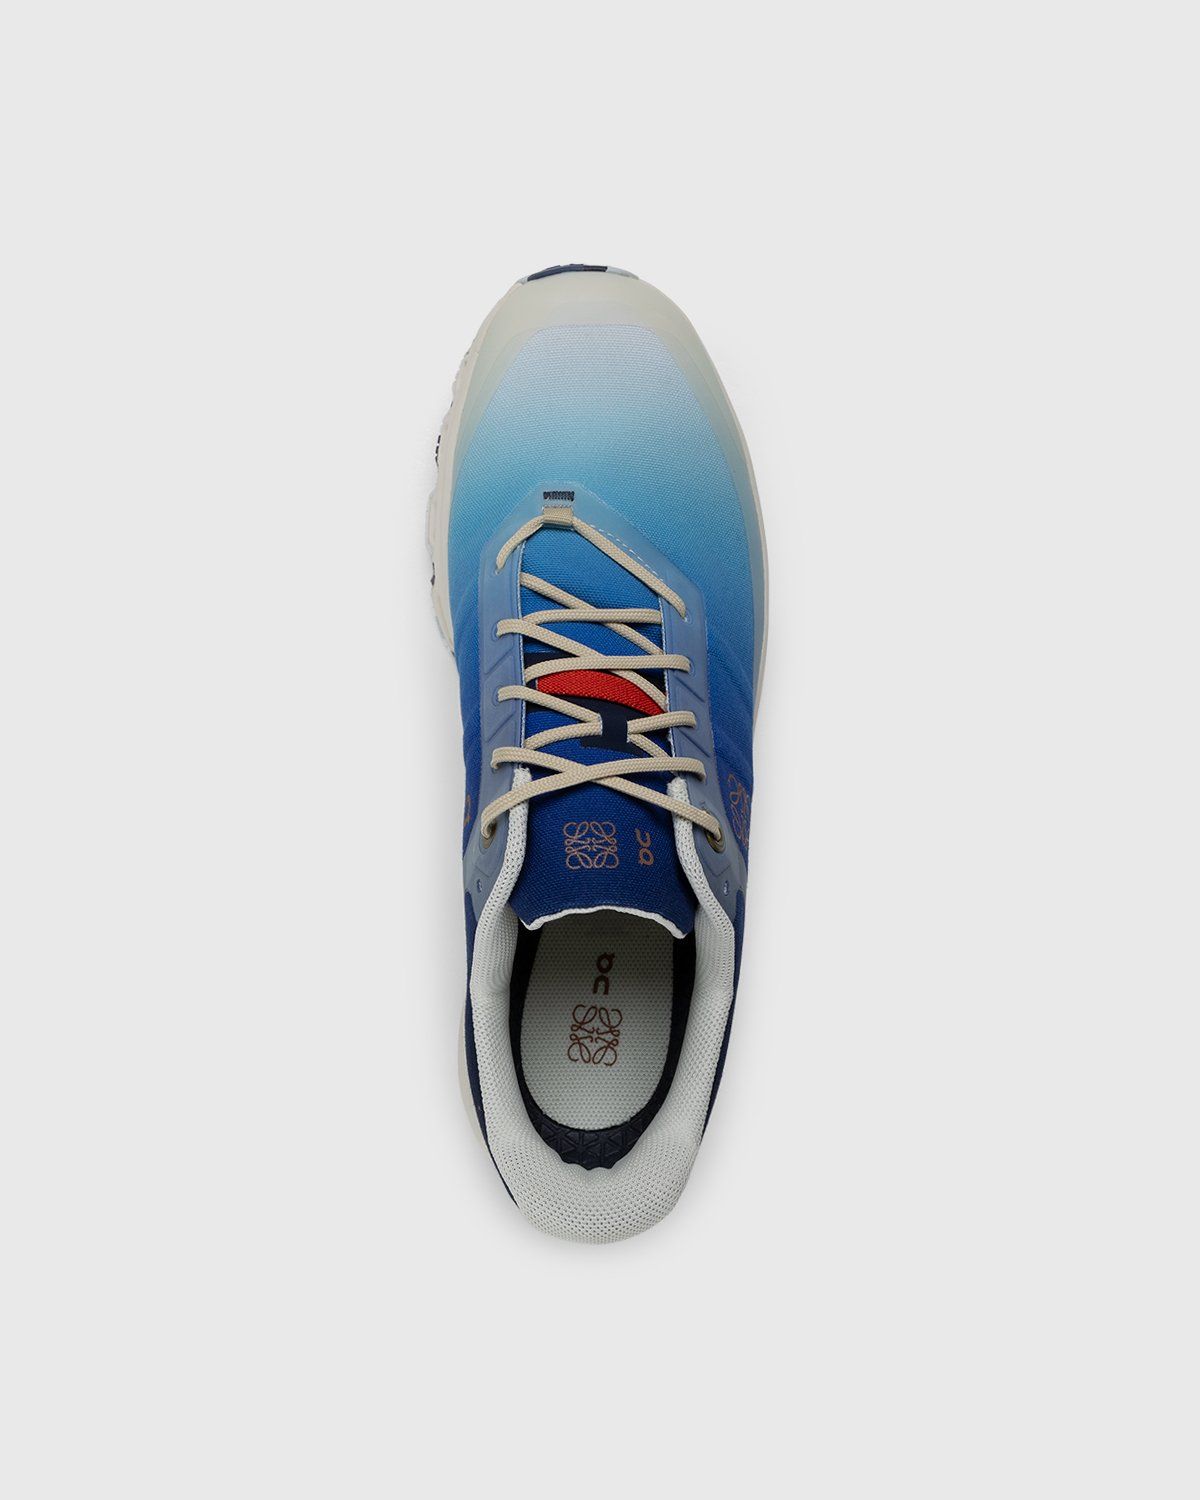 Loewe x On – Men's Cloudventure Gradient Blue - Low Top Sneakers - Blue - Image 6